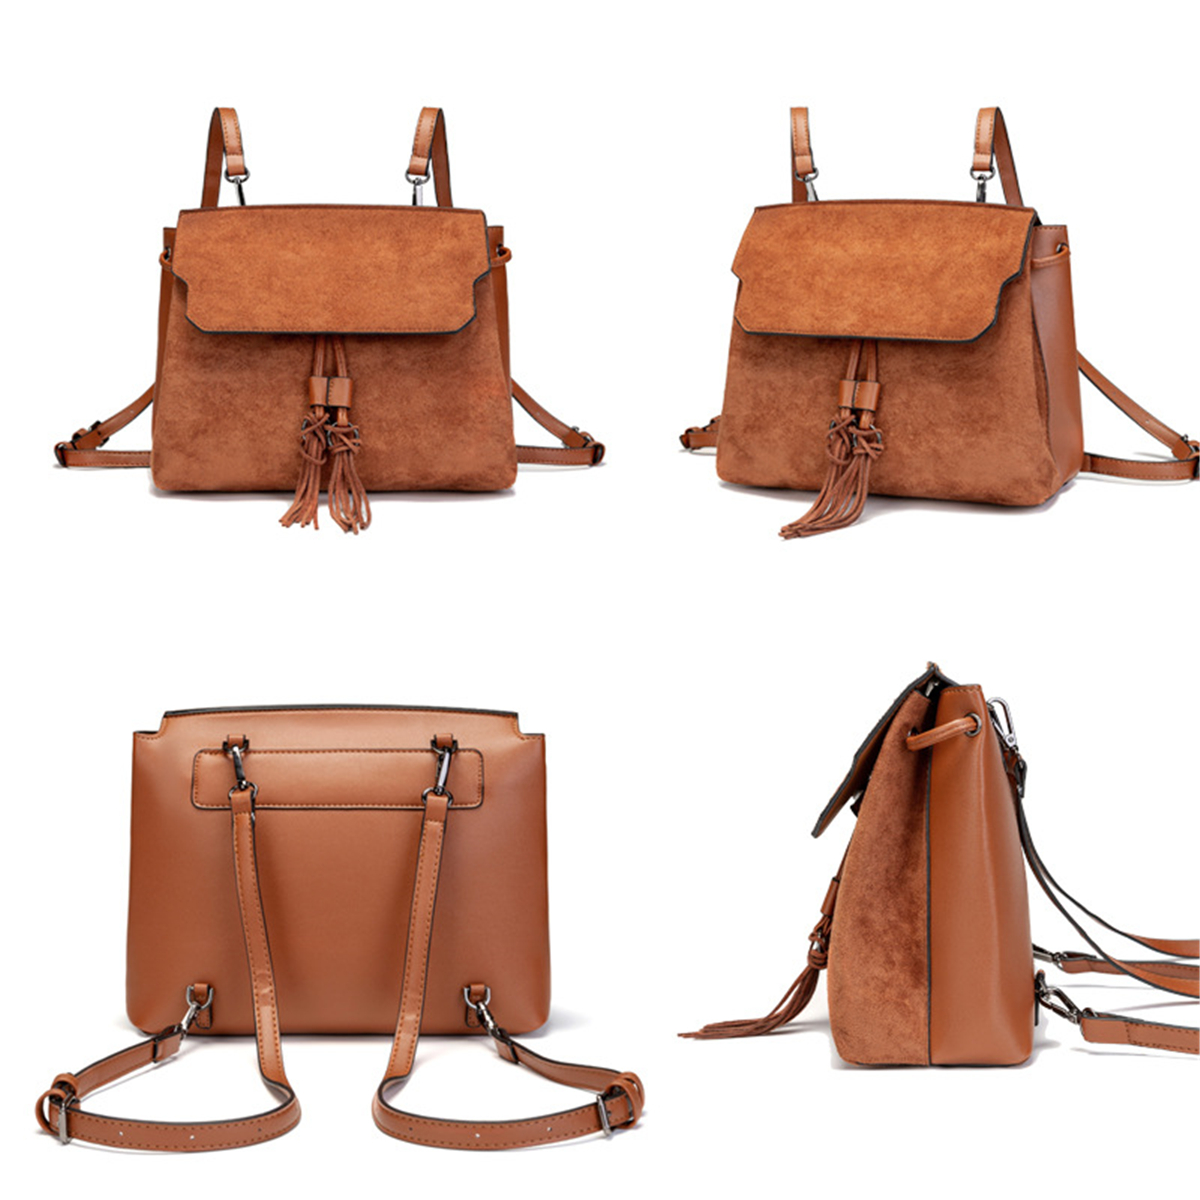 Outdoor-PU-Leather-Backpack-Women-Tassel-Handbag-School-Bag-Travel-Rucksack-1627681-7